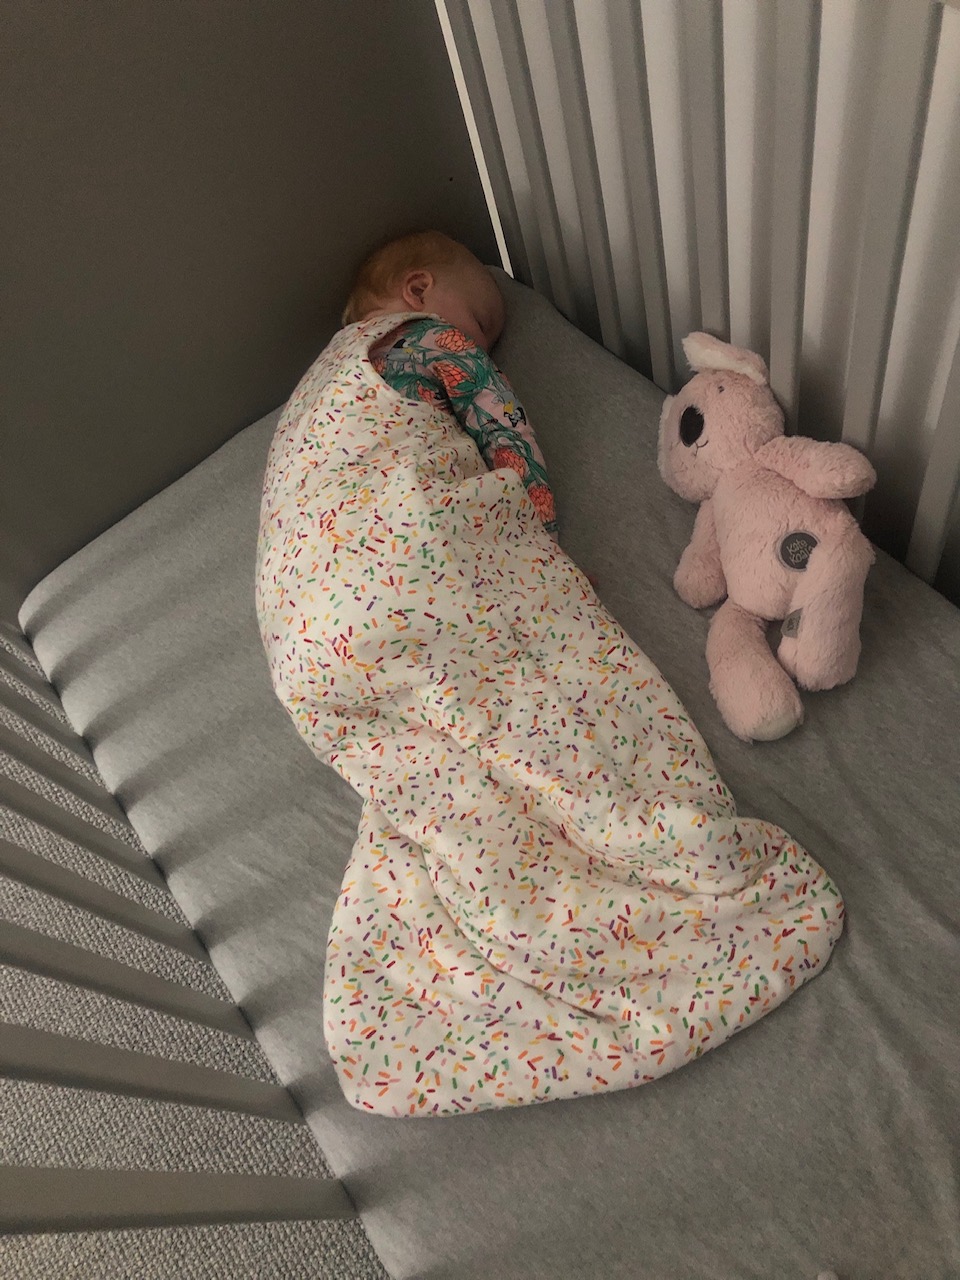 little girl sleeping in crib with teddy